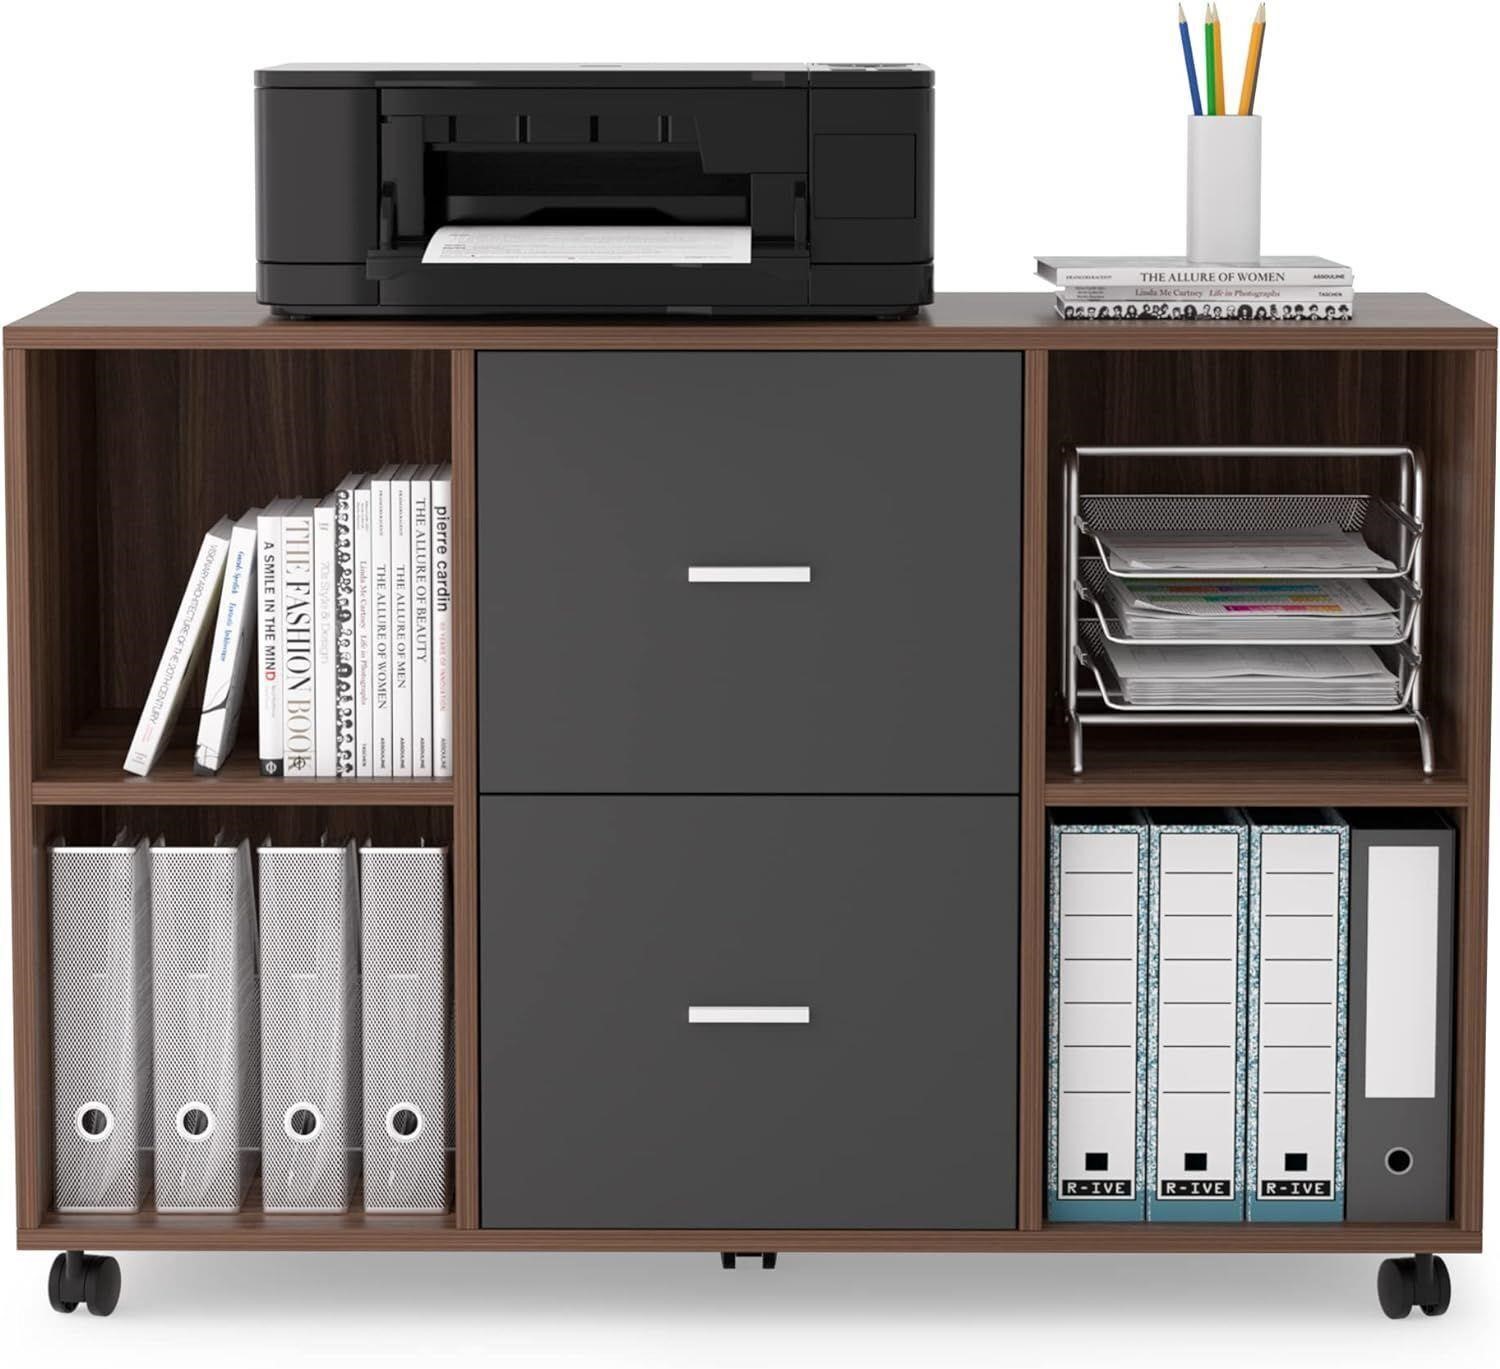 2-Drawer Wood File Cabinet